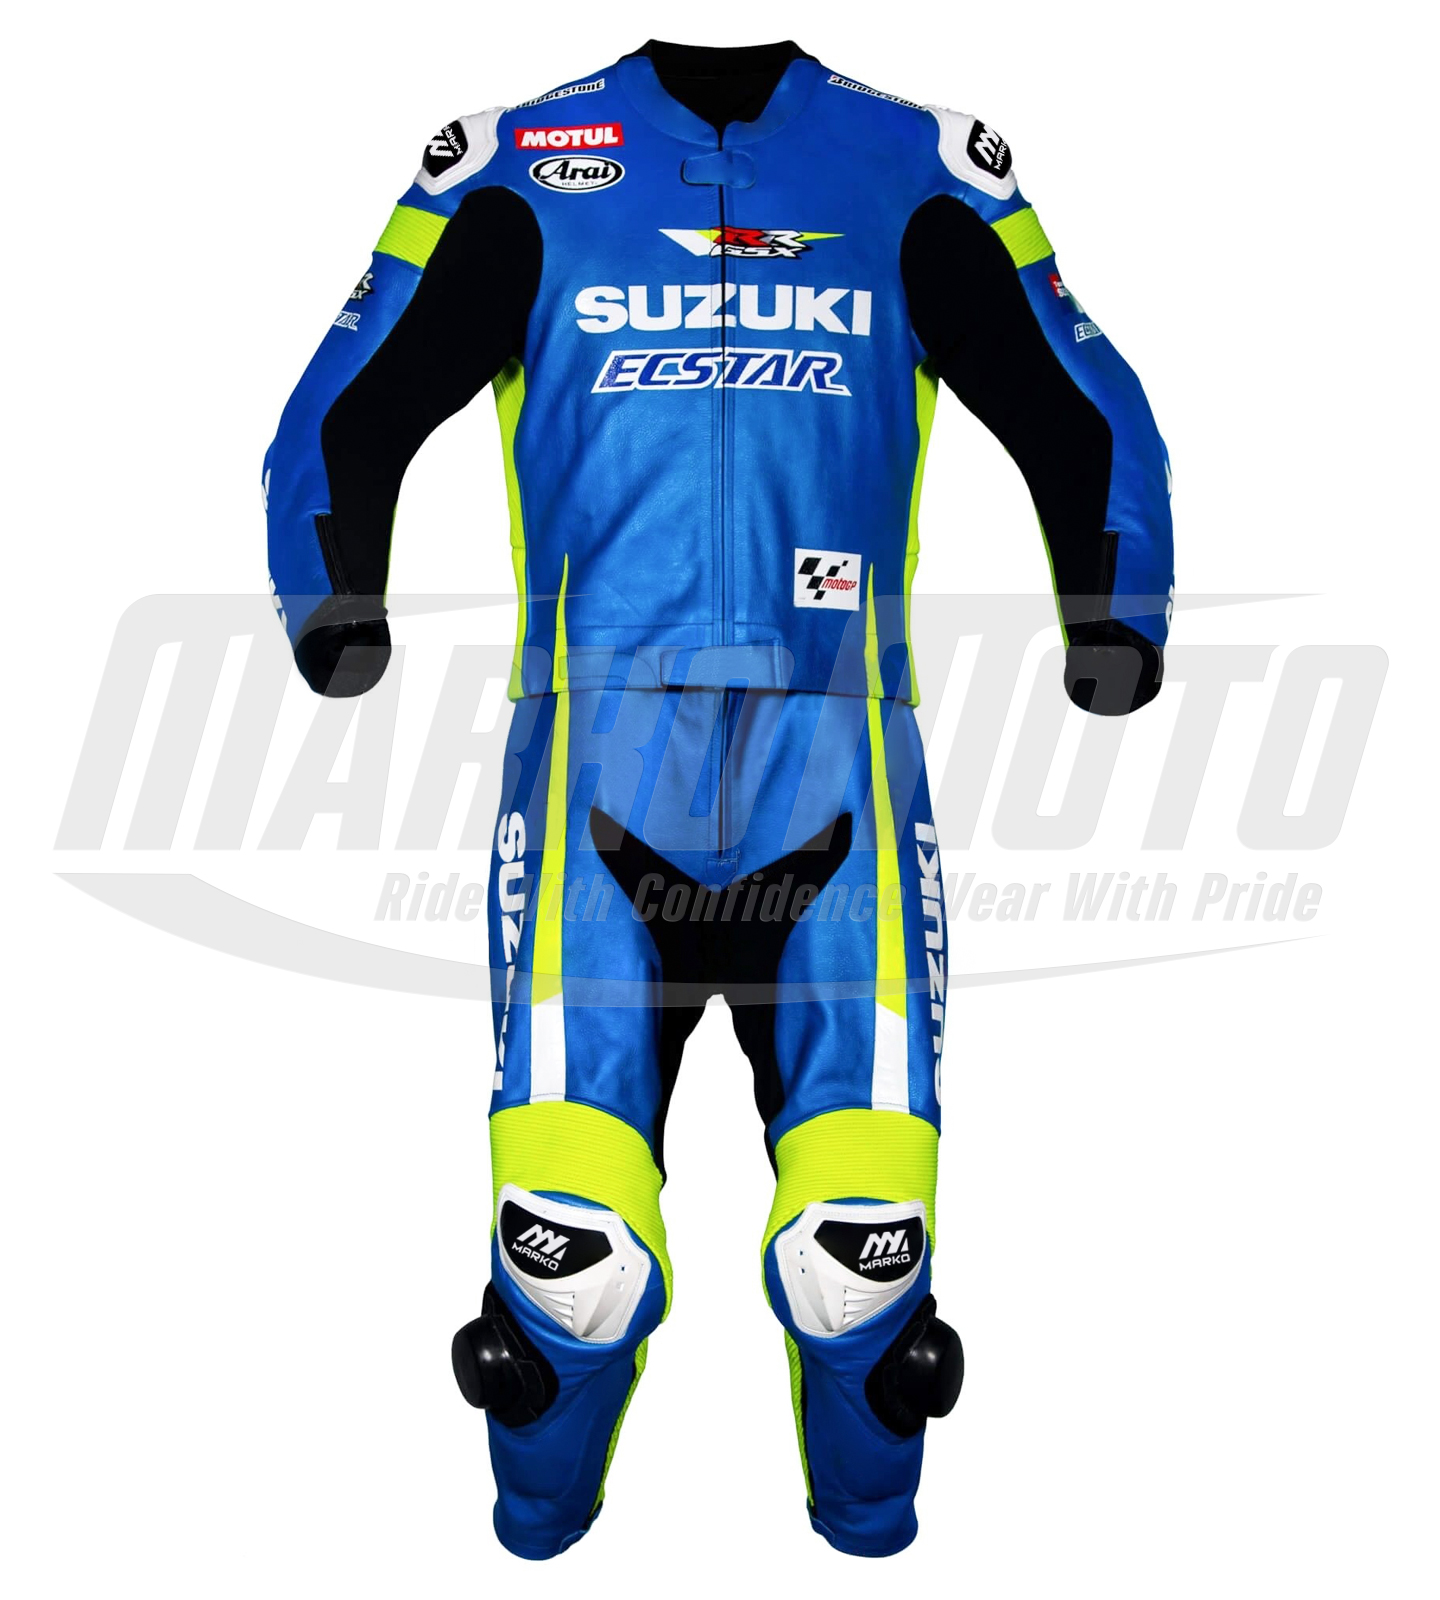 Aleix Espargaro Suzuki 2015 Motorcycle Leather Racing Suit 1pc & 2pcs